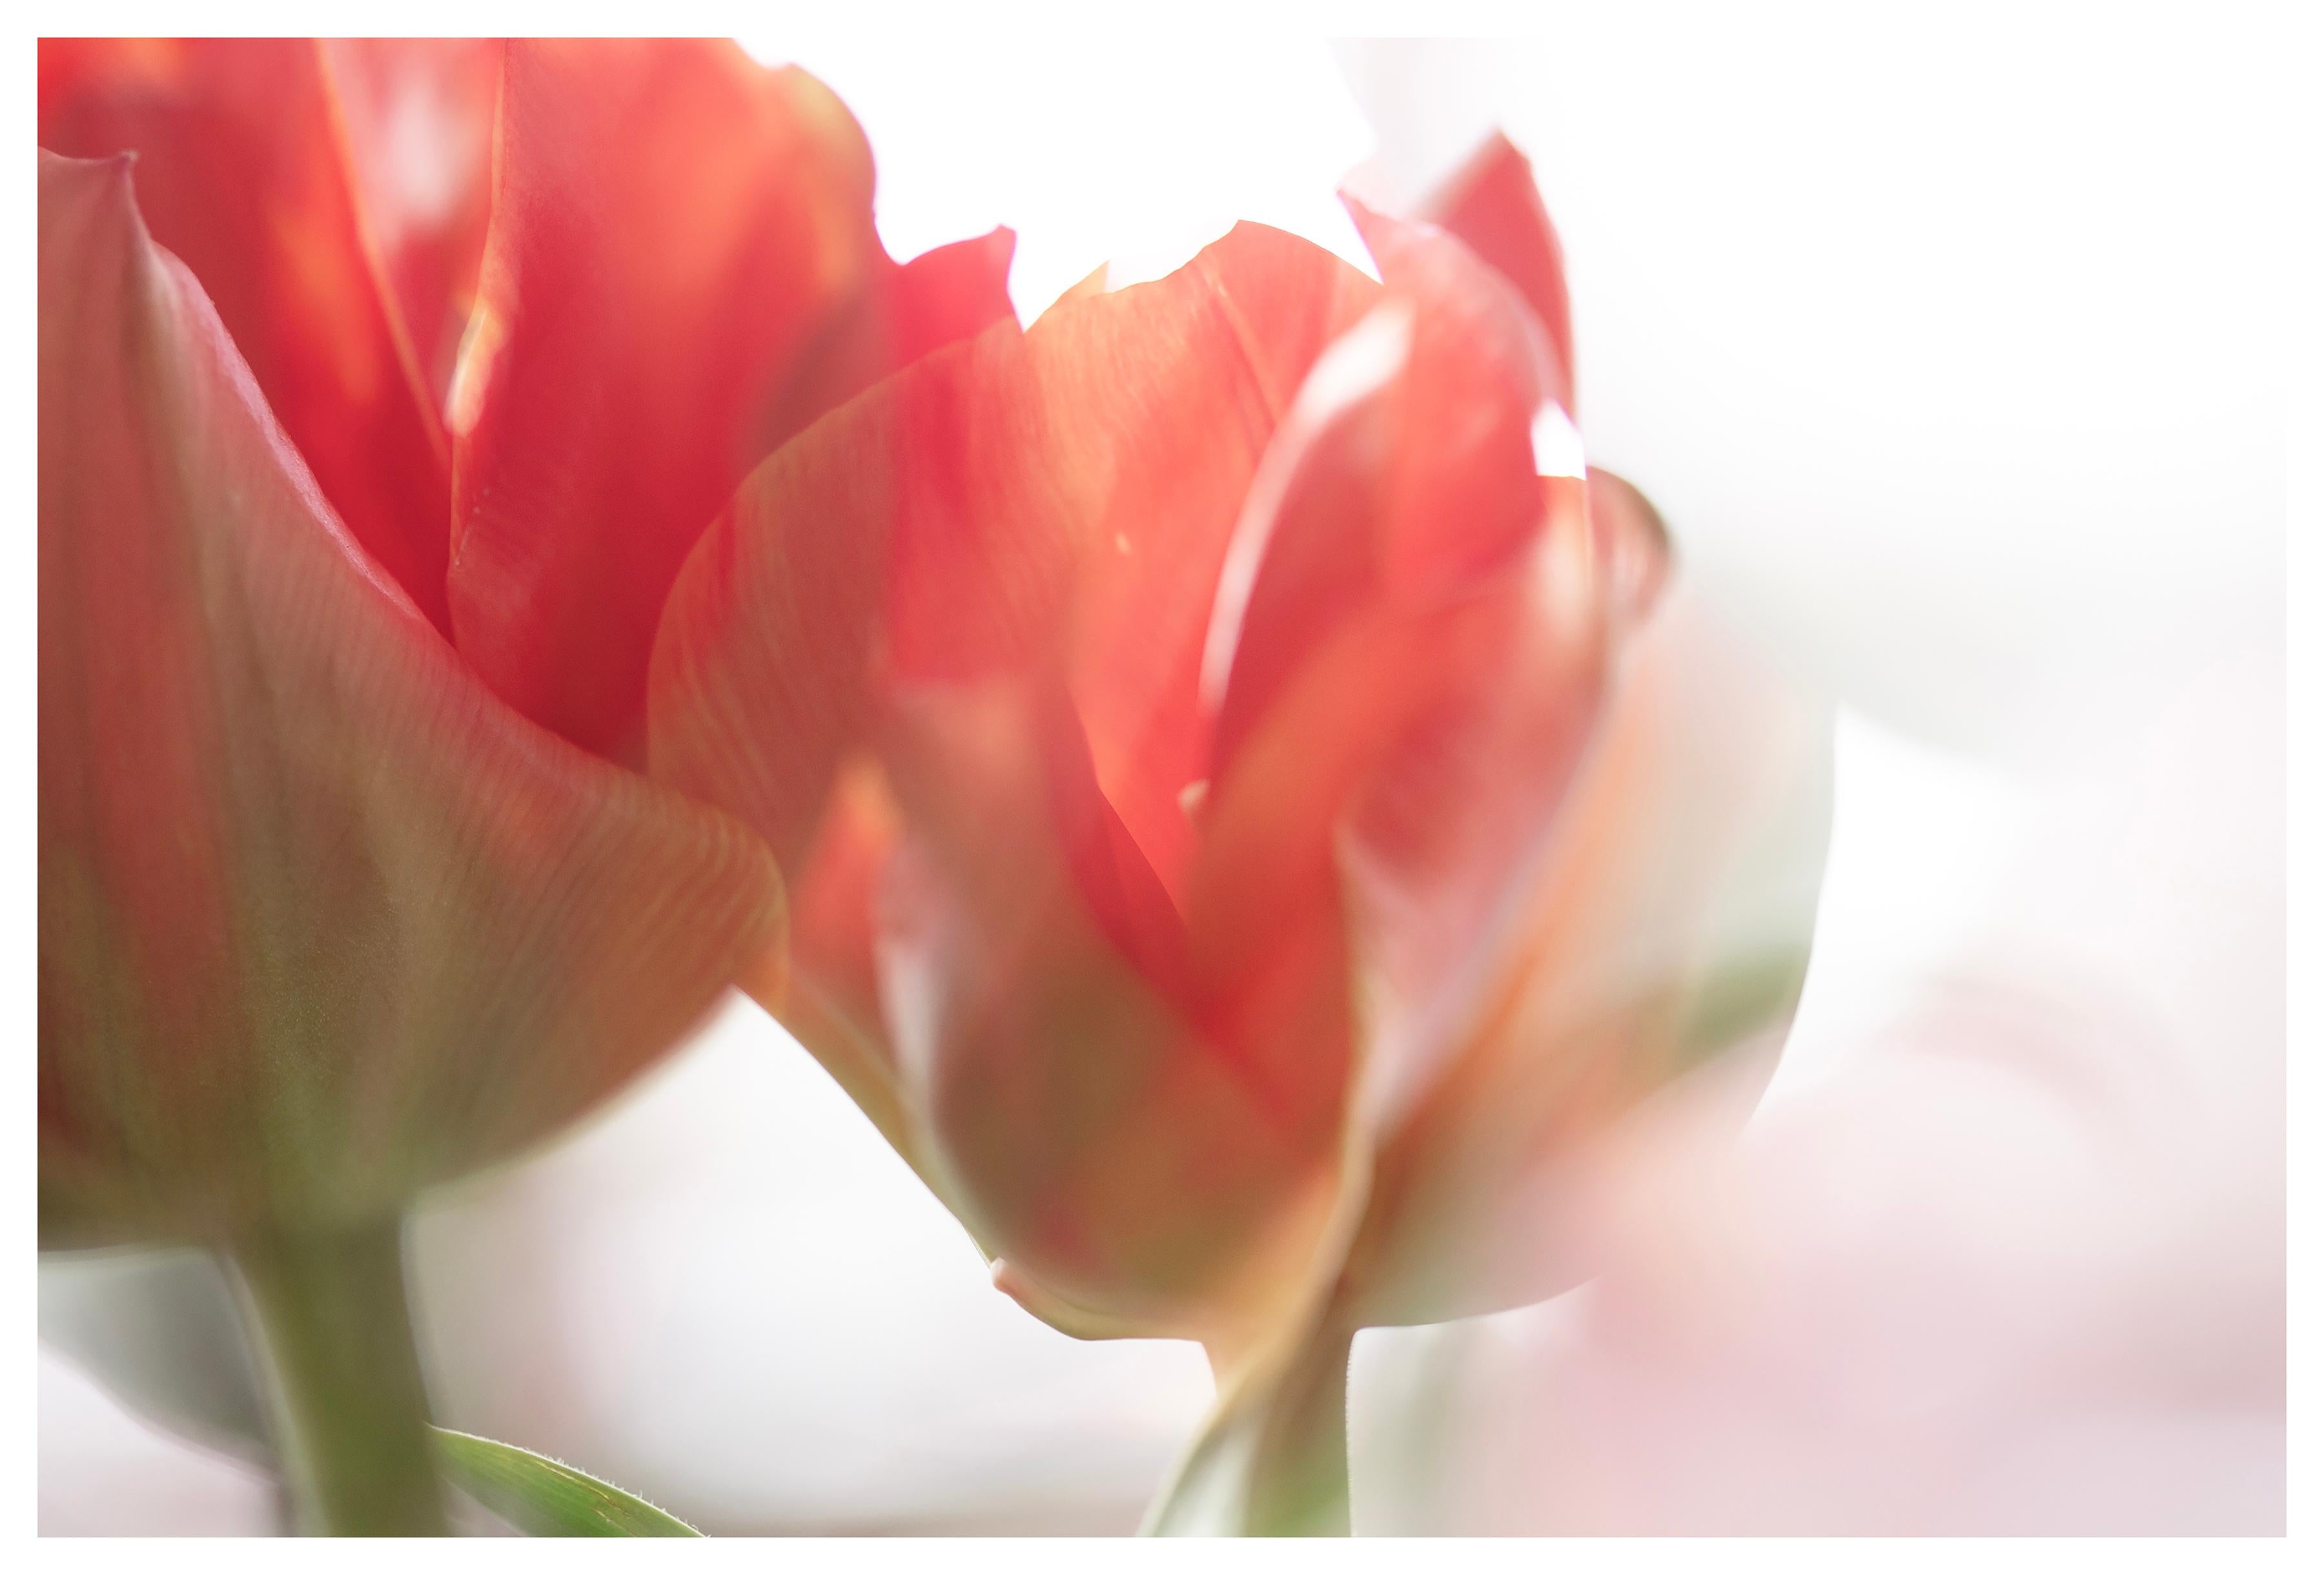 Sophia Milligan Abstract Photograph - 'Sunday's Tulips (I)' Large Scale Photograph bold flower pastel red orange white